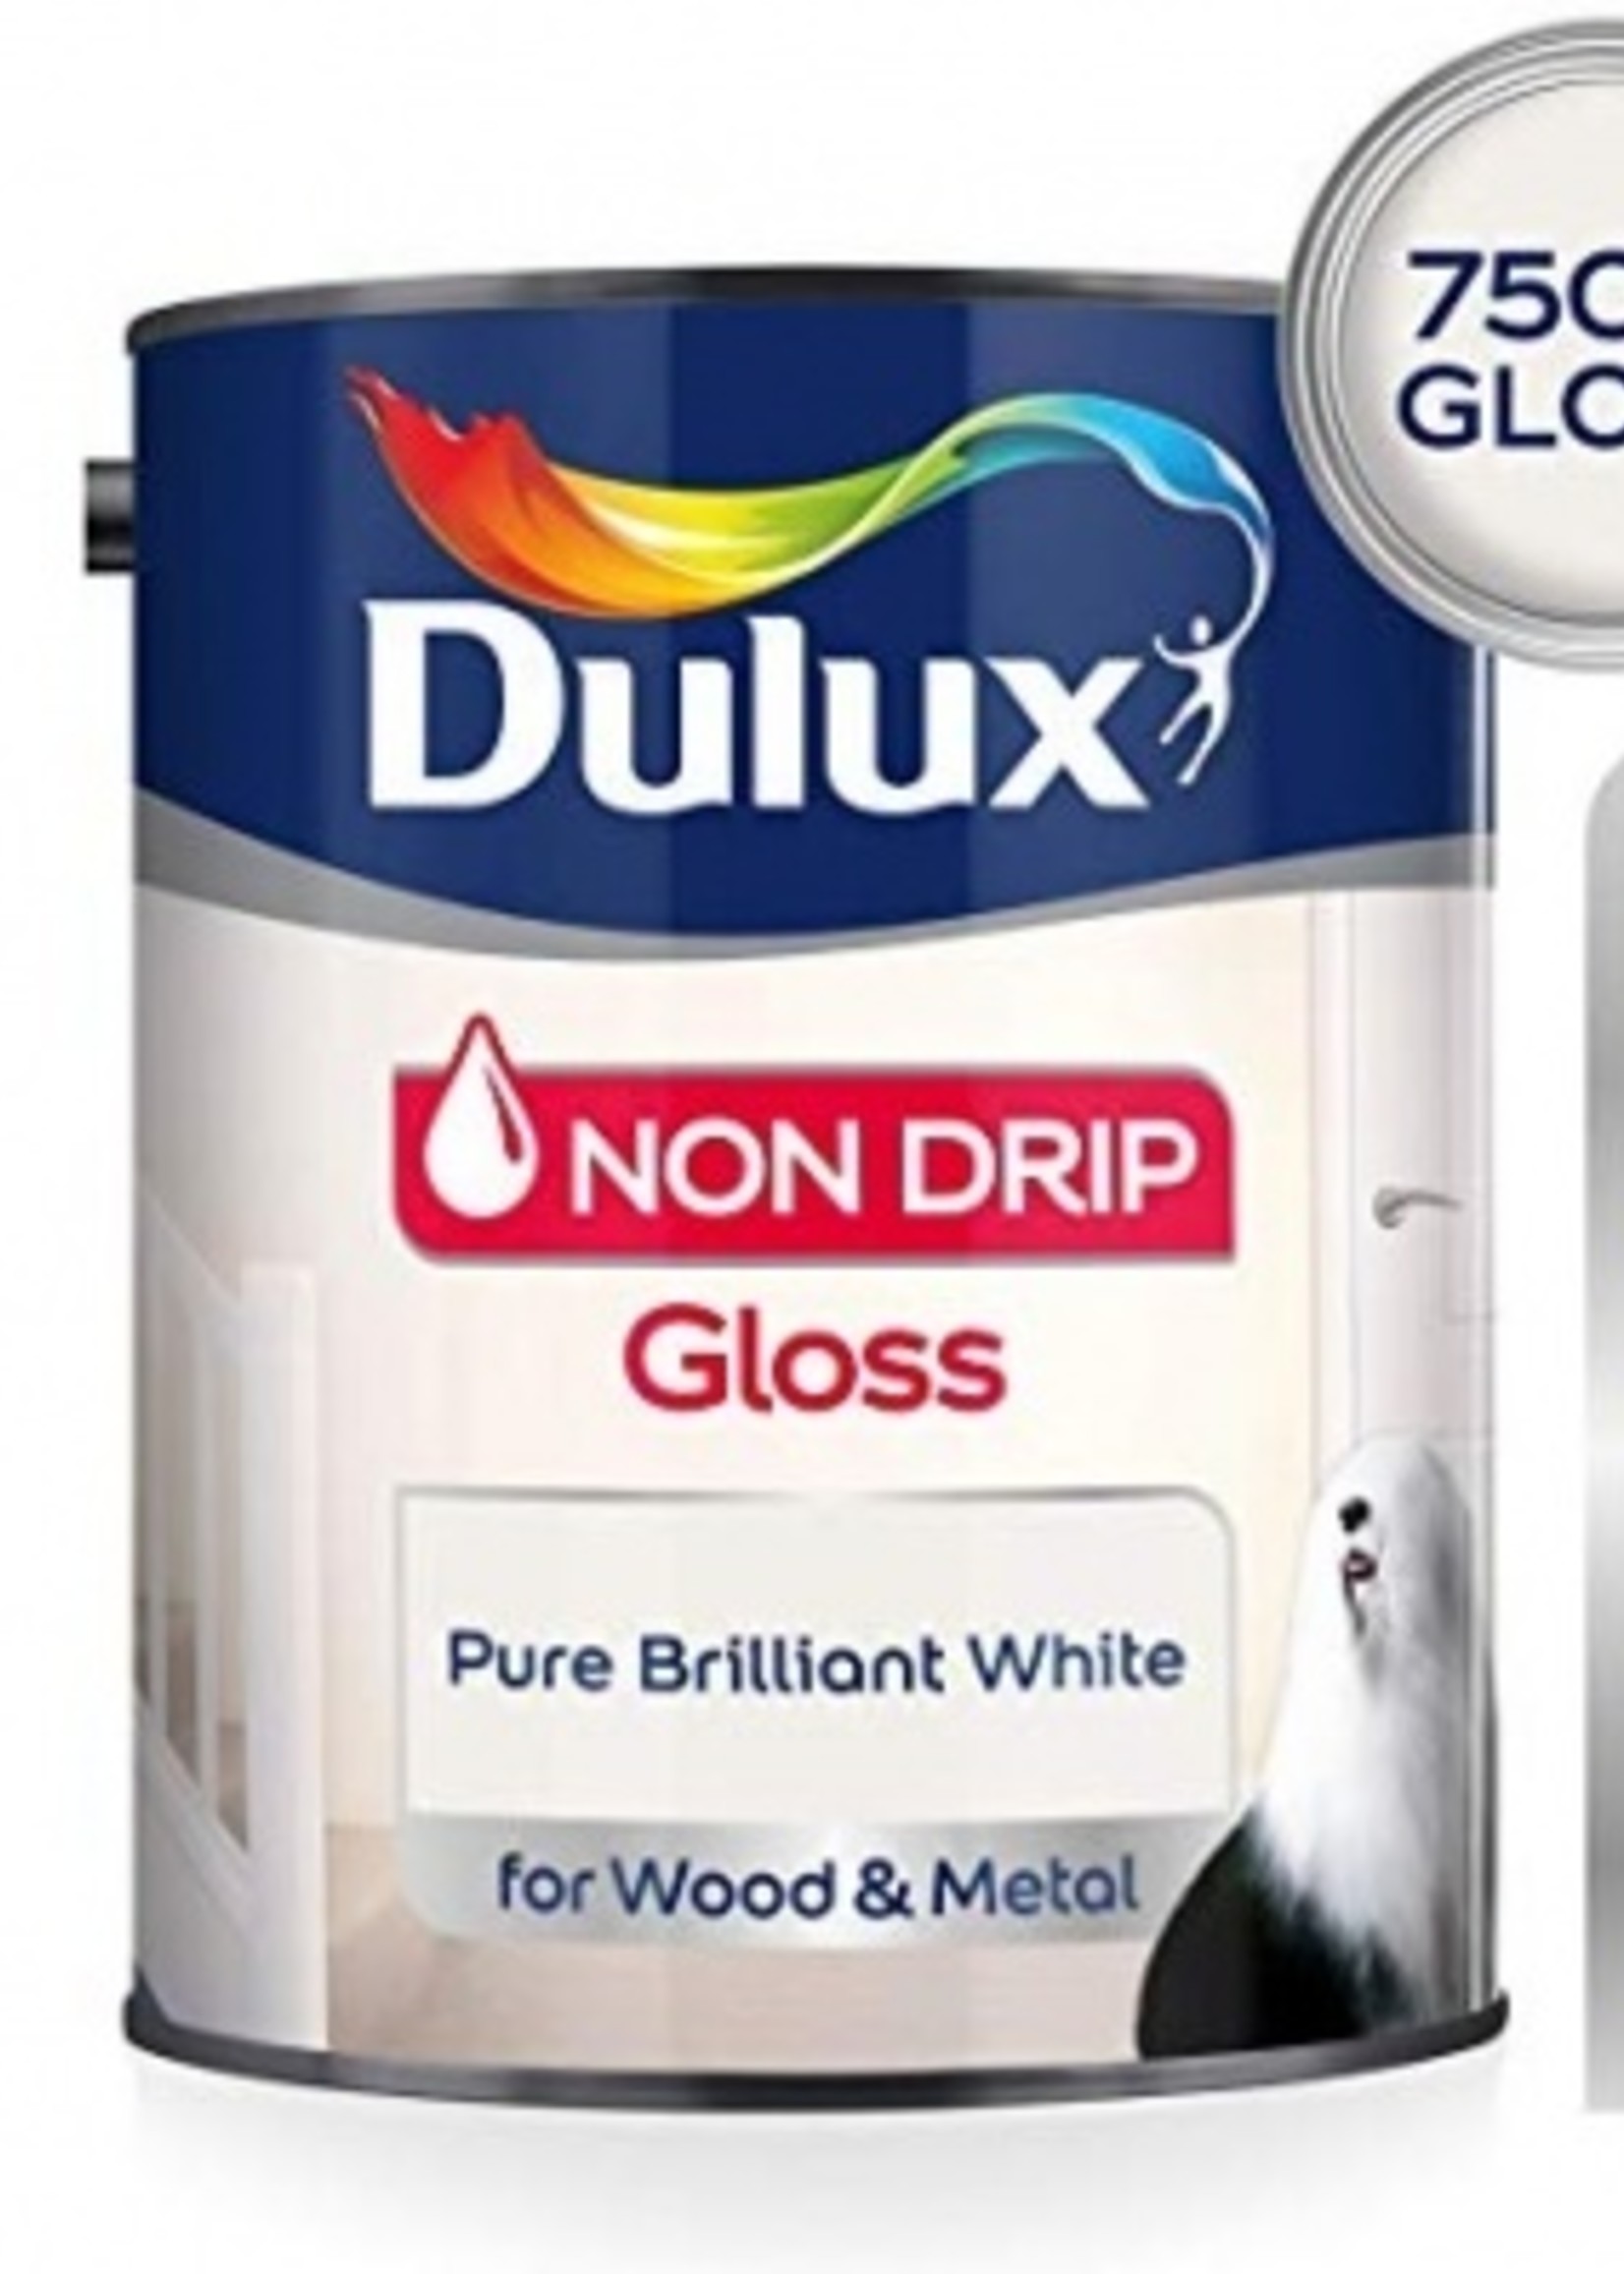 Dulux (Akzo Nobel) Dulux Pure Brilliant White (PBW) 750ml Non Drip Gloss